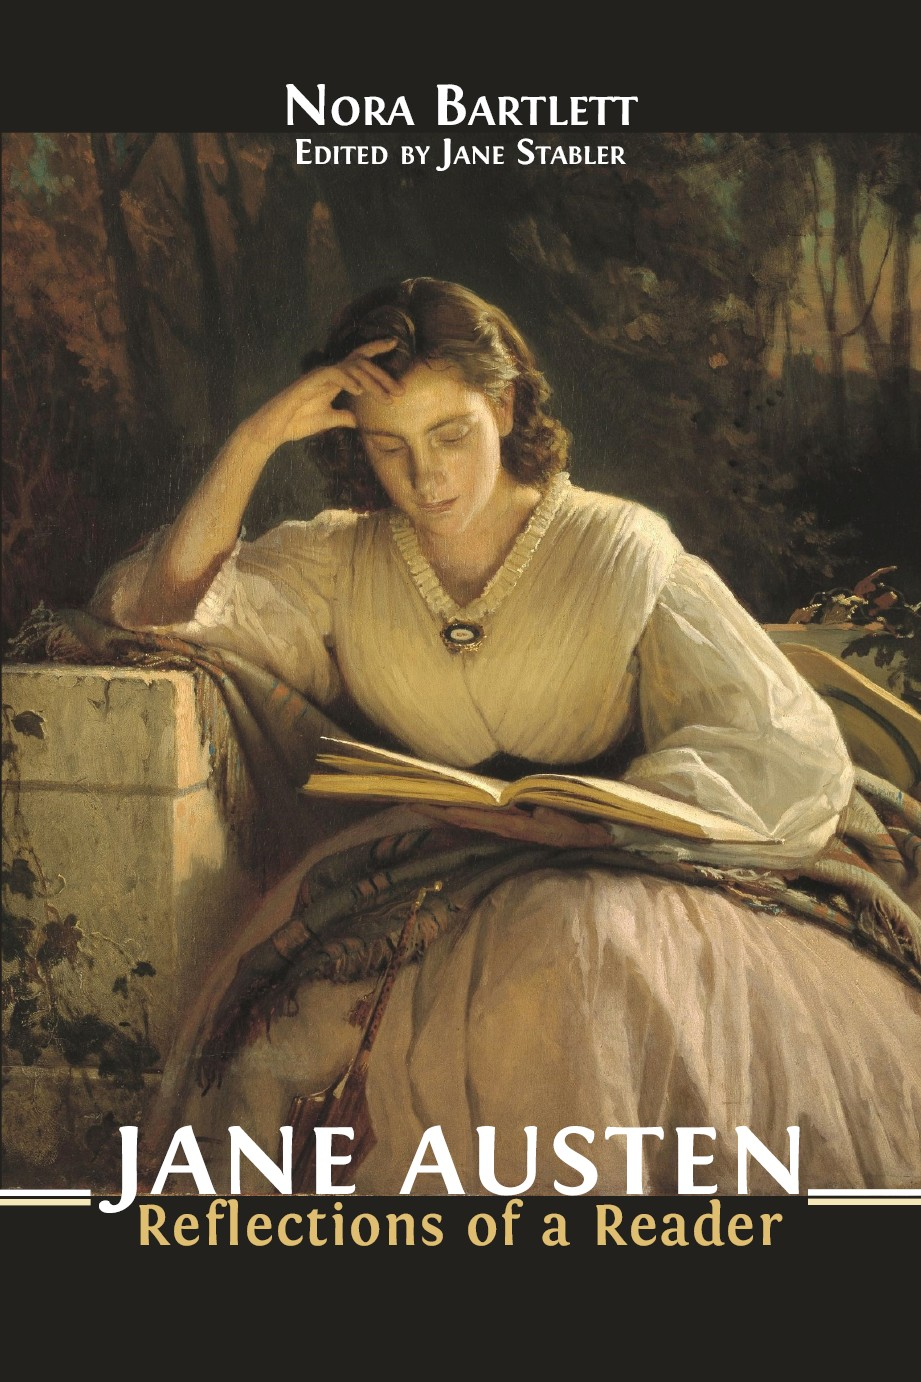 Jane Austen book cover image